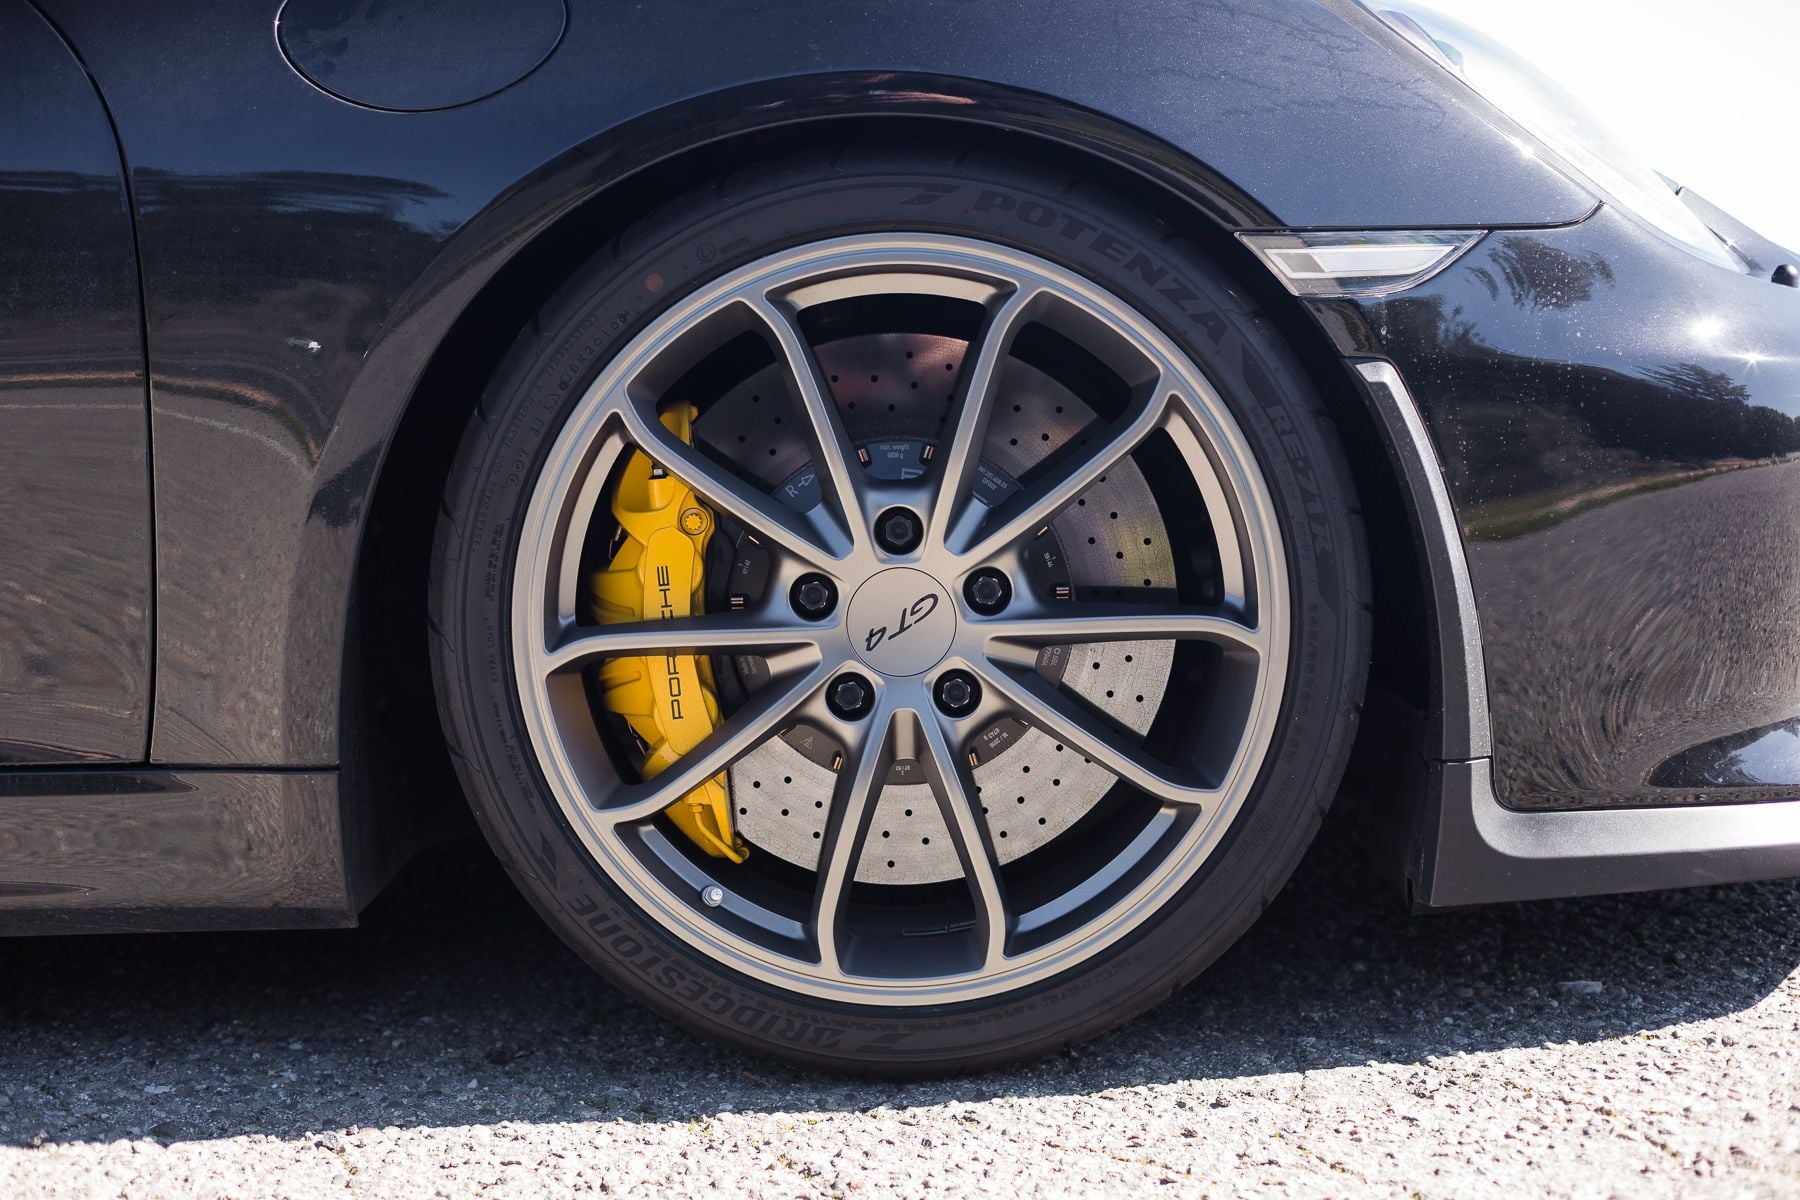 2016 Porsche Cayman GT4 - FS: [CA] Jet Black 2016 Porsche Cayman GT4 - Used - VIN WP0AC2A85GK192266 - 9,400 Miles - 6 cyl - 2WD - Manual - Coupe - Black - San Mateo, CA 94404, United States